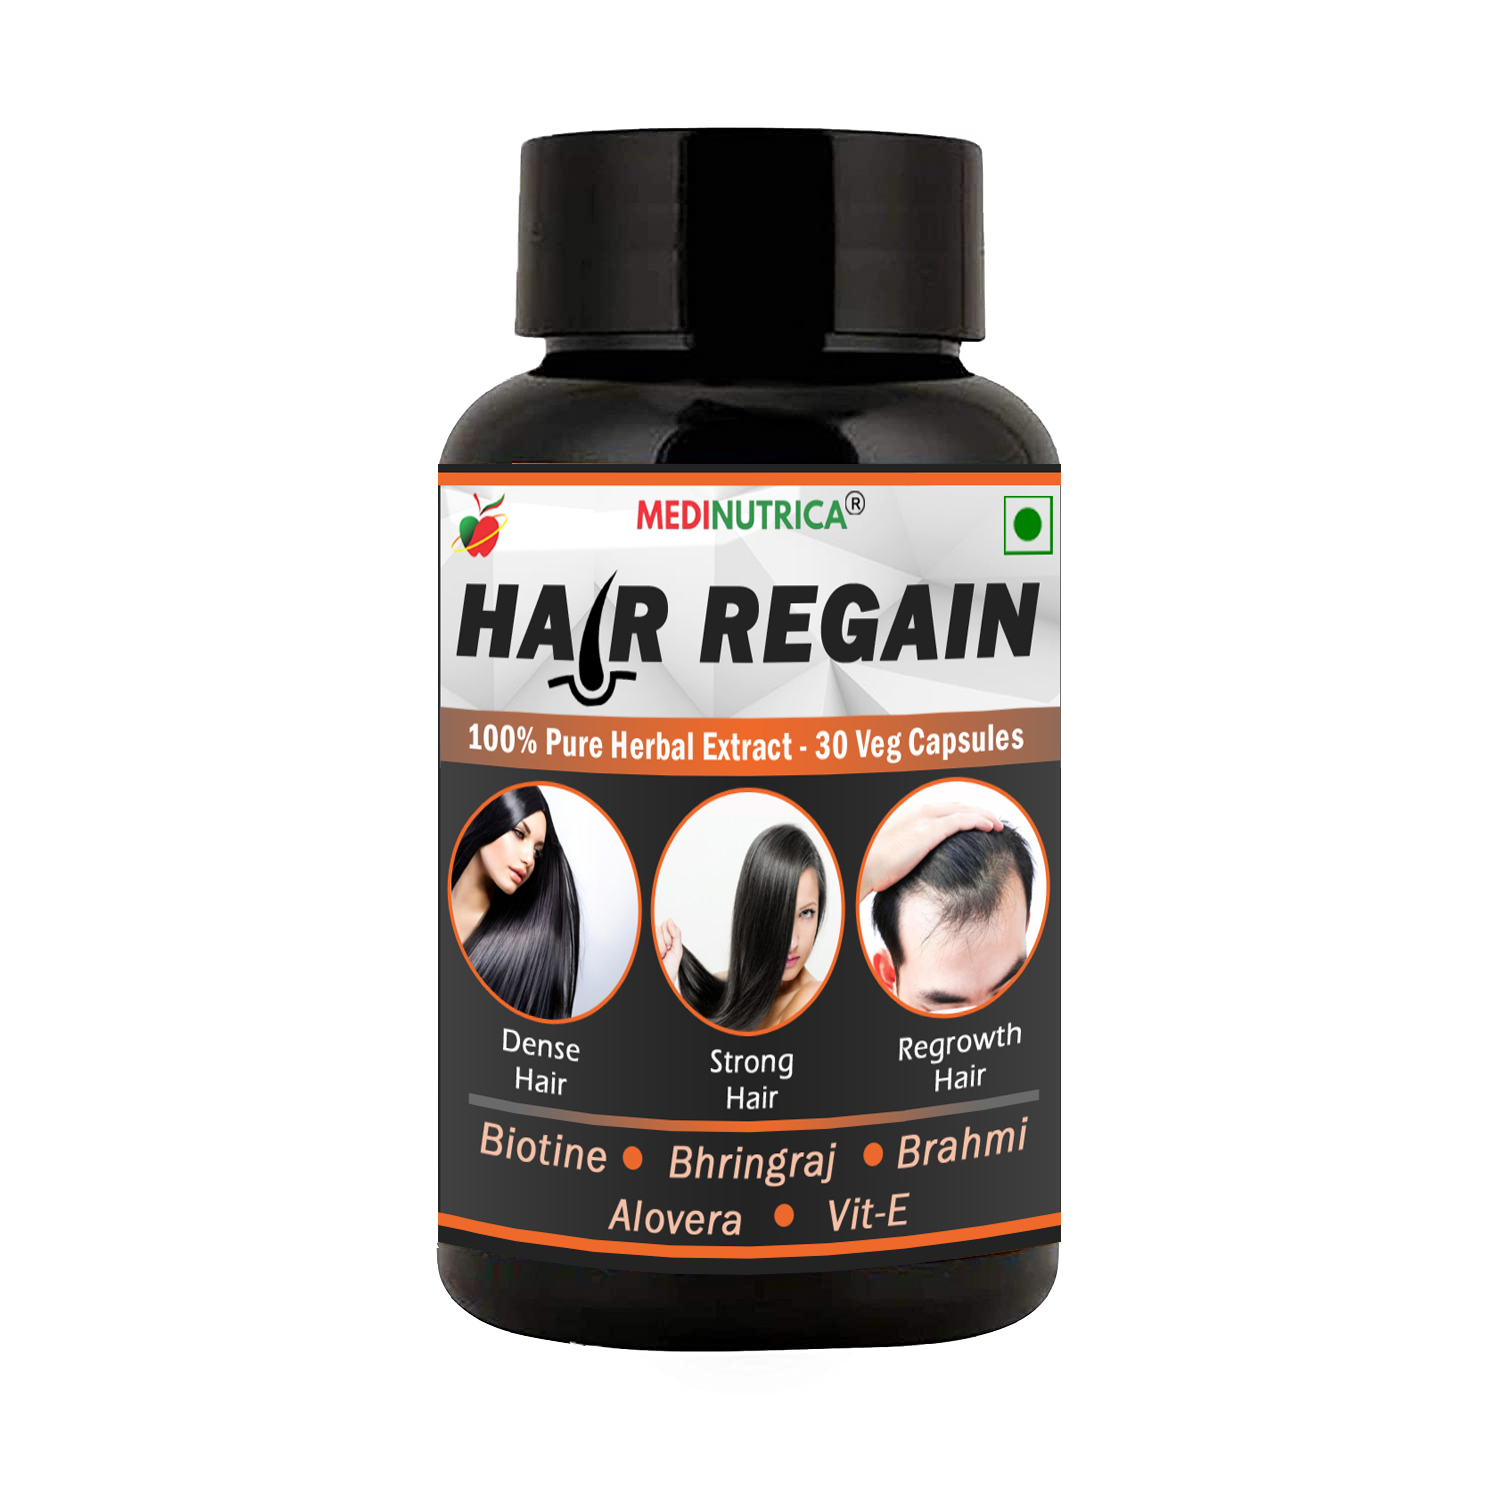 HAIR CARE REGAIN 30 VEG CAPSULES Herbal Tablets for Hair Growth